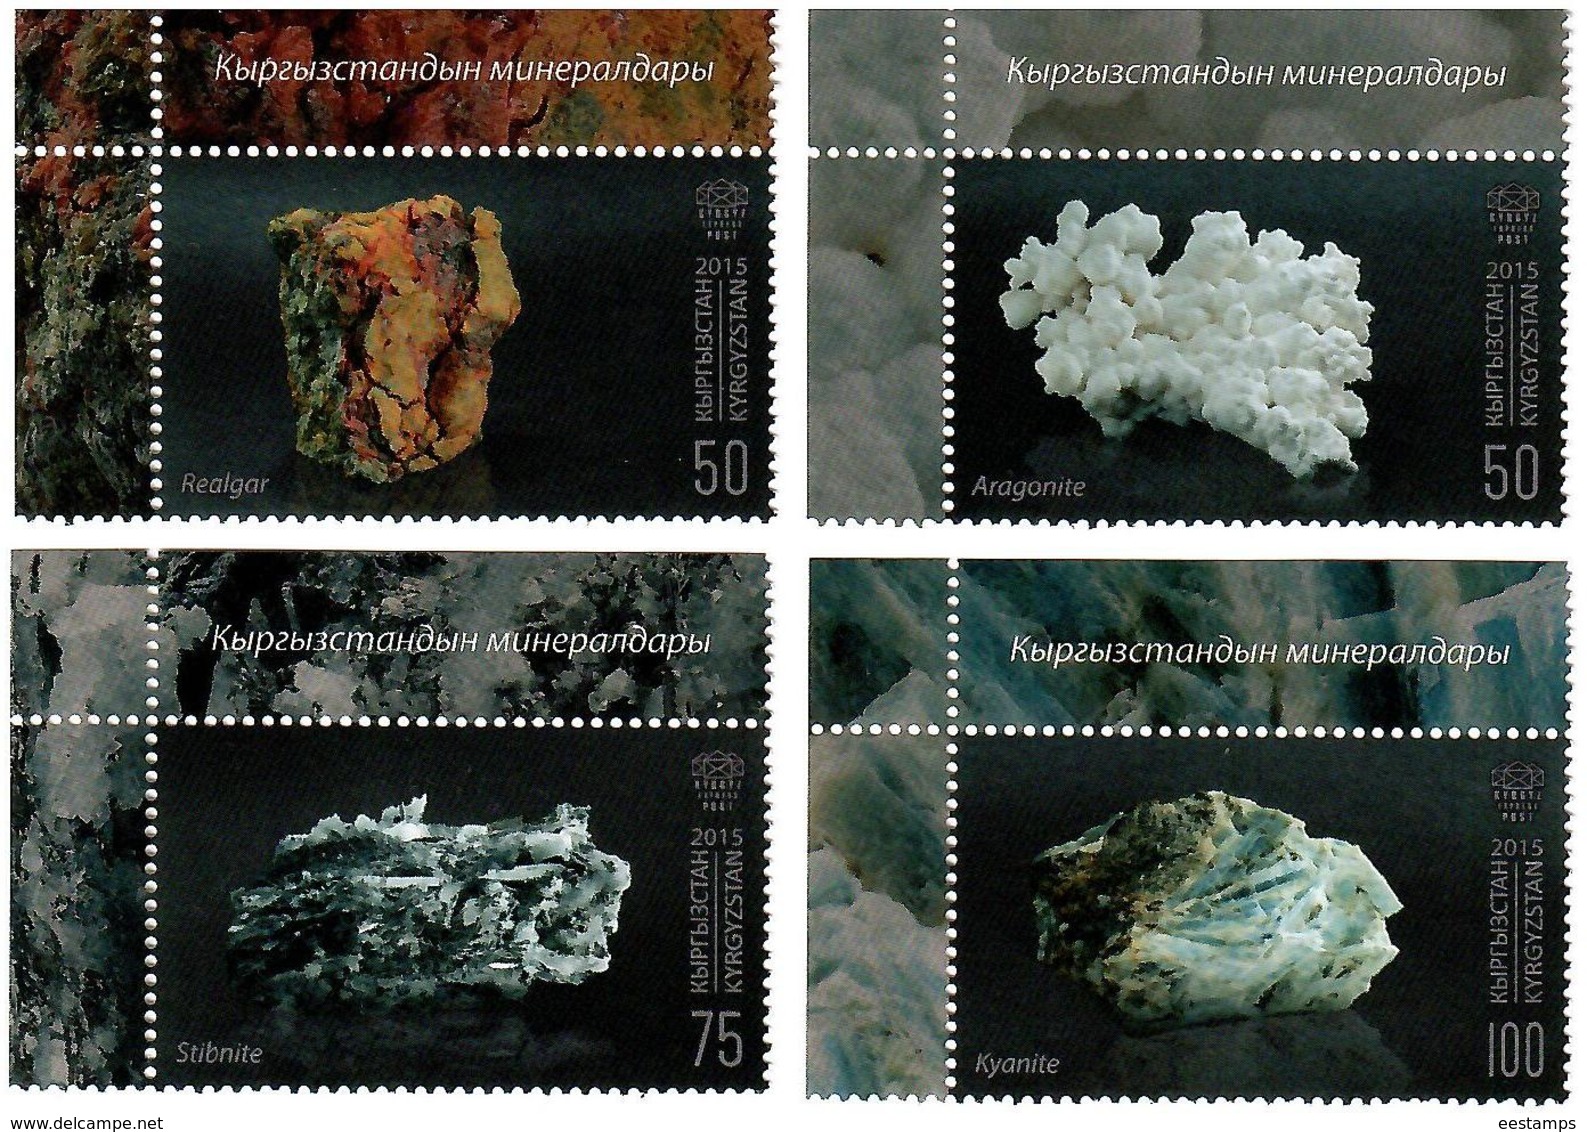 Kyrgyzstan.2015 Minerals. 4v: 50, 50, 70, 100 Michel #  EP 22-25 - Kirghizistan